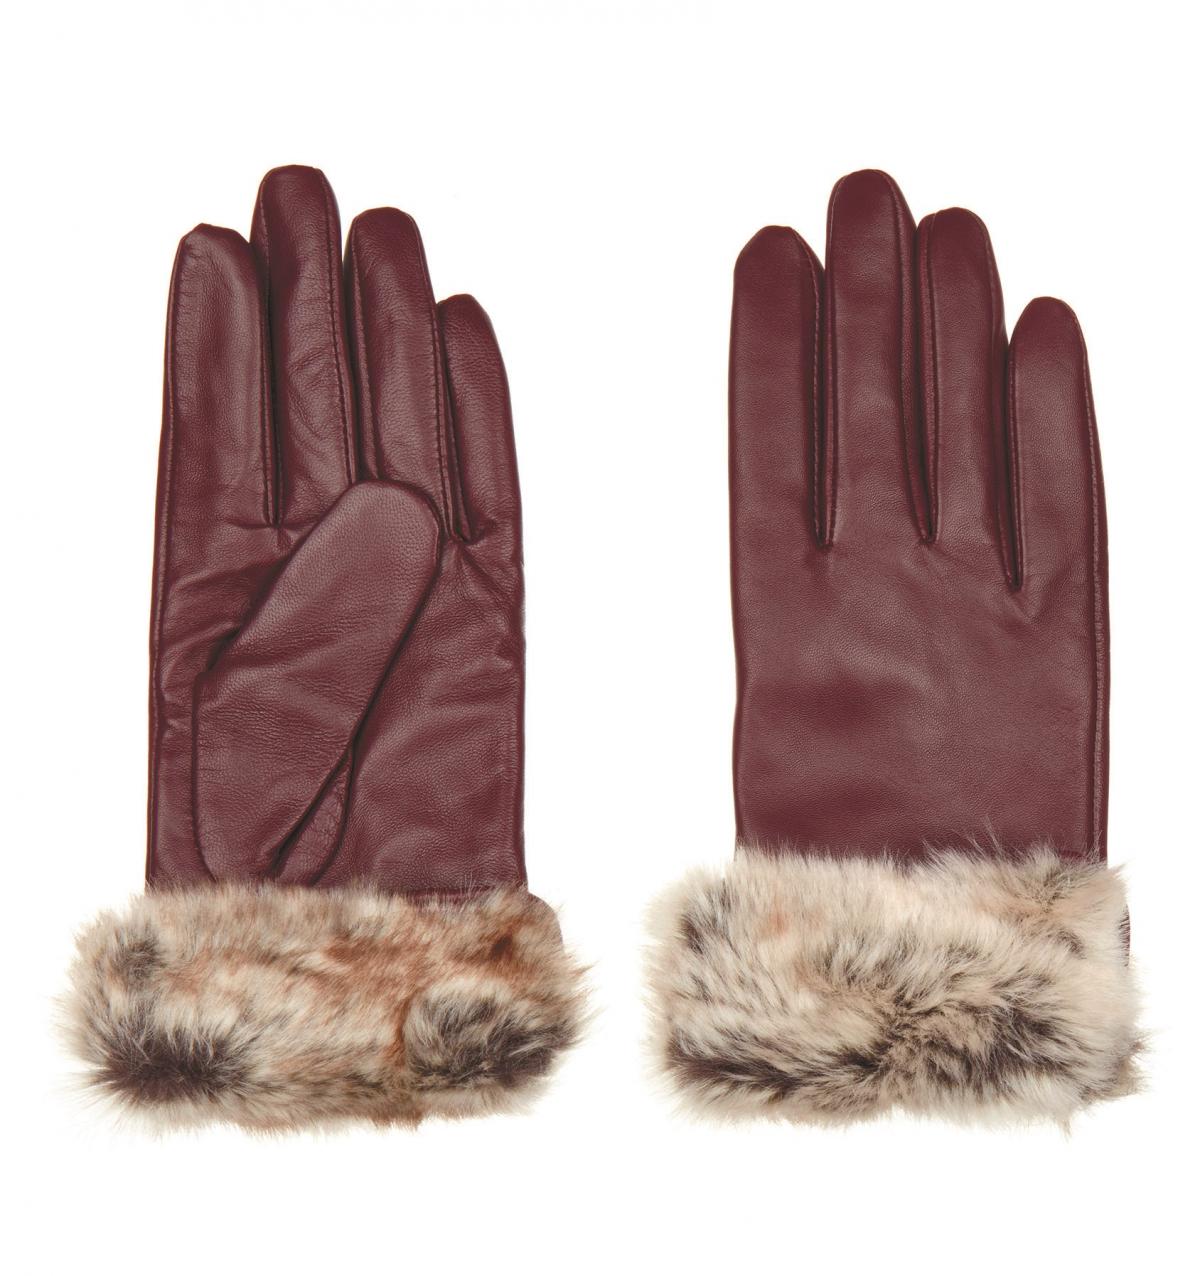 Accessorize, Turnback Cuff Leather Gloves, £25